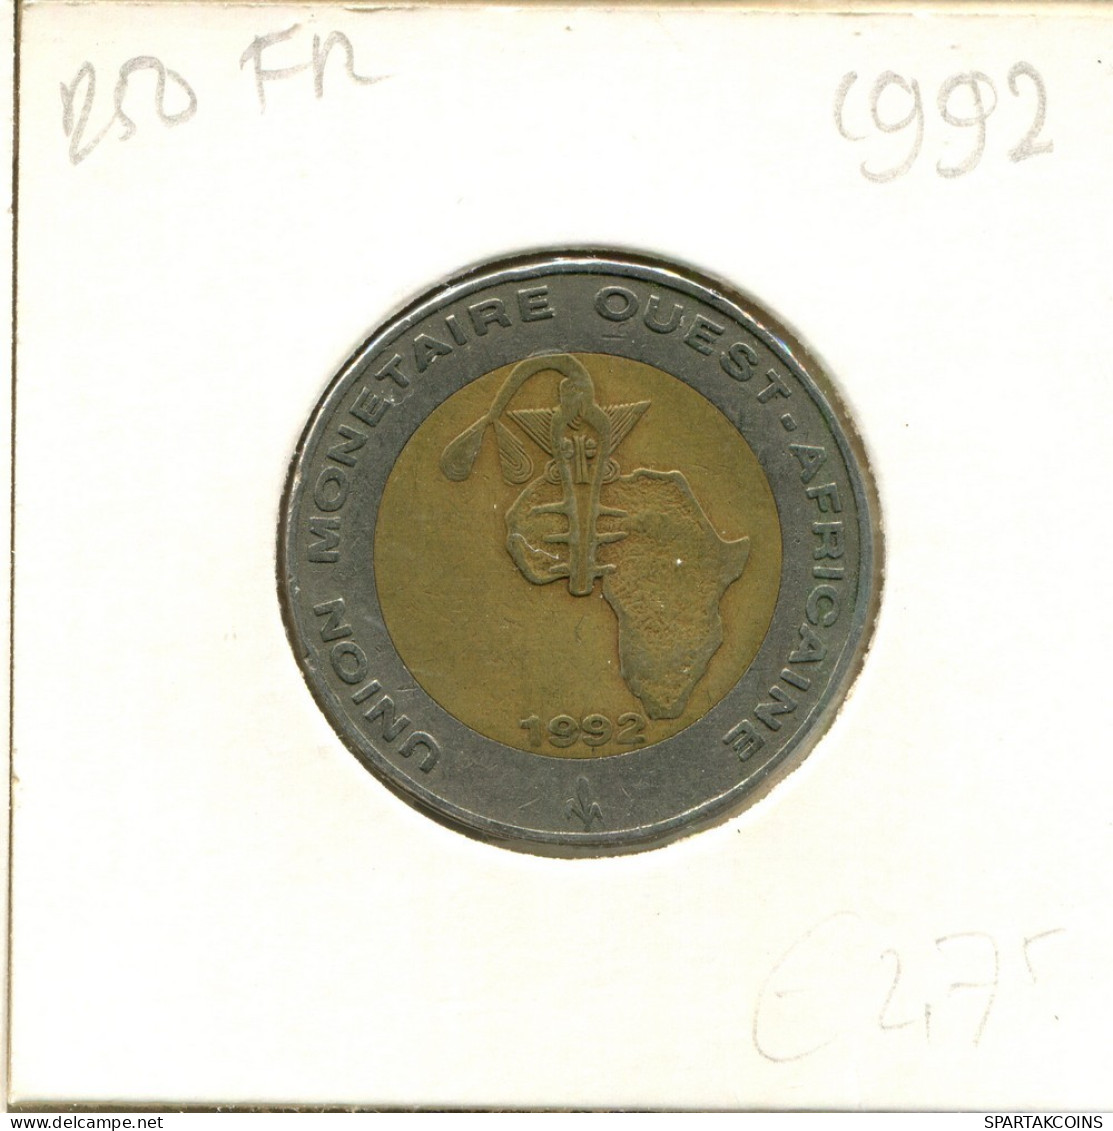 250 FRANCS CFA 1992 Western African States (BCEAO) BIMETALLIC Moneda #AT059.E.A - Otros – Africa